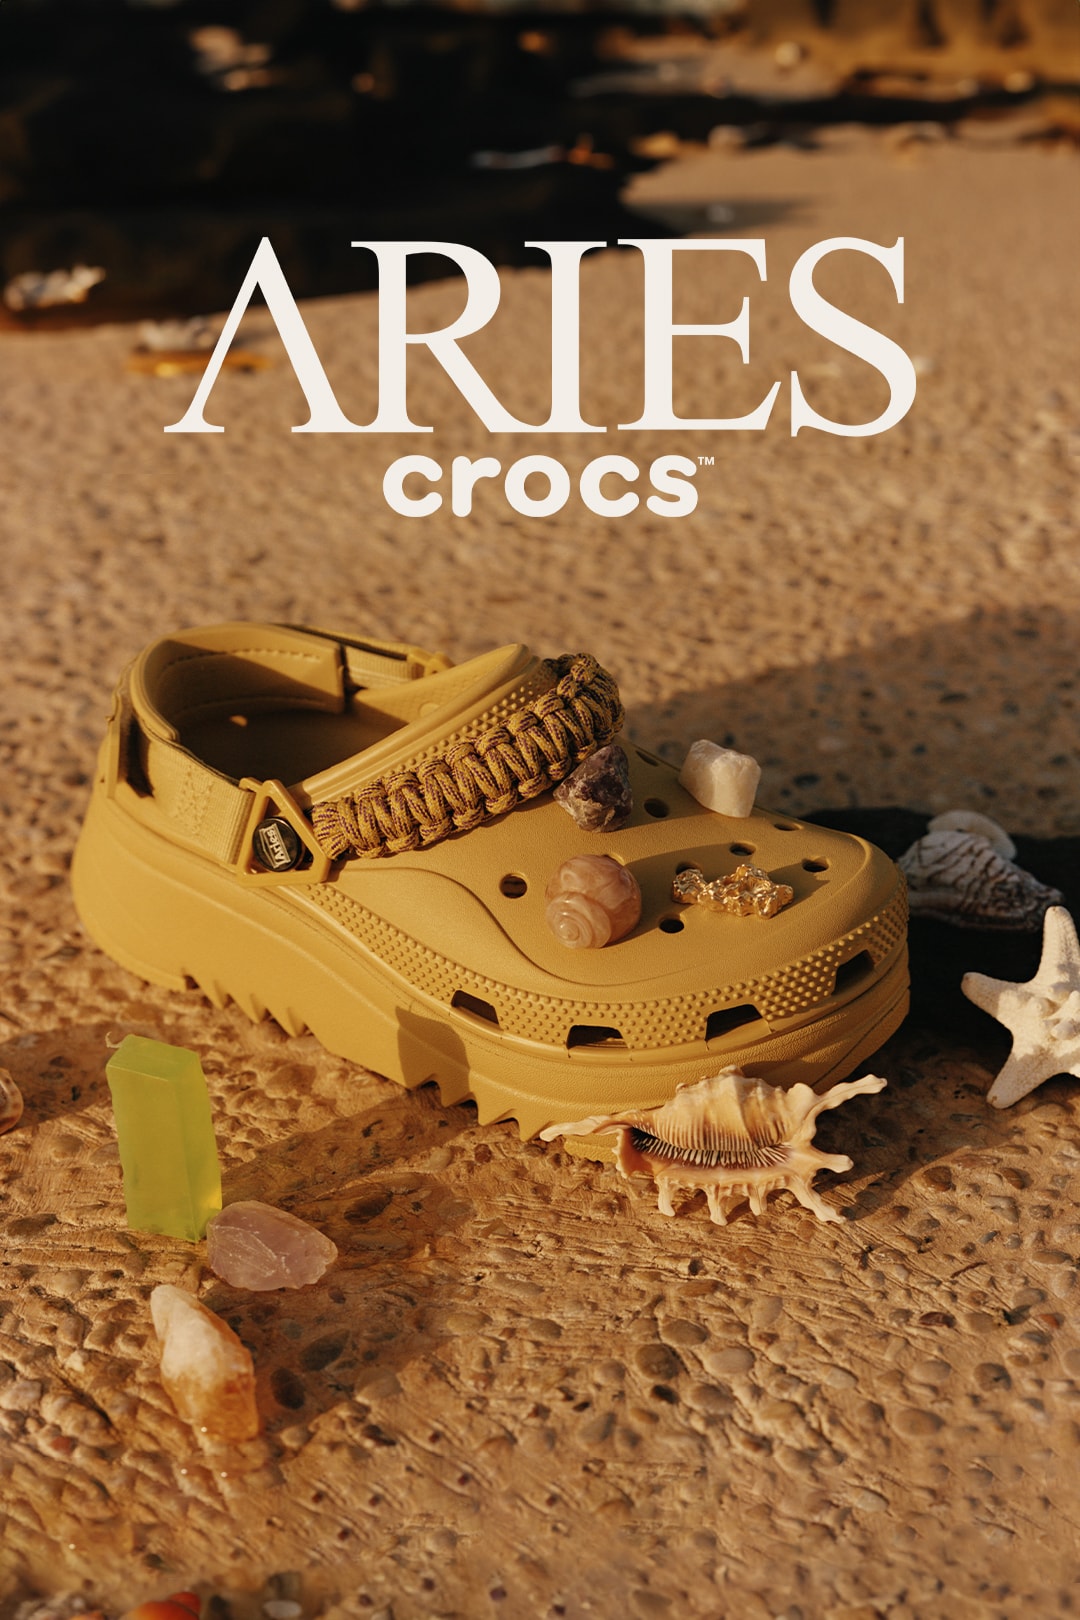 Crocs 首次携手 Aries 推出全新联名鞋款